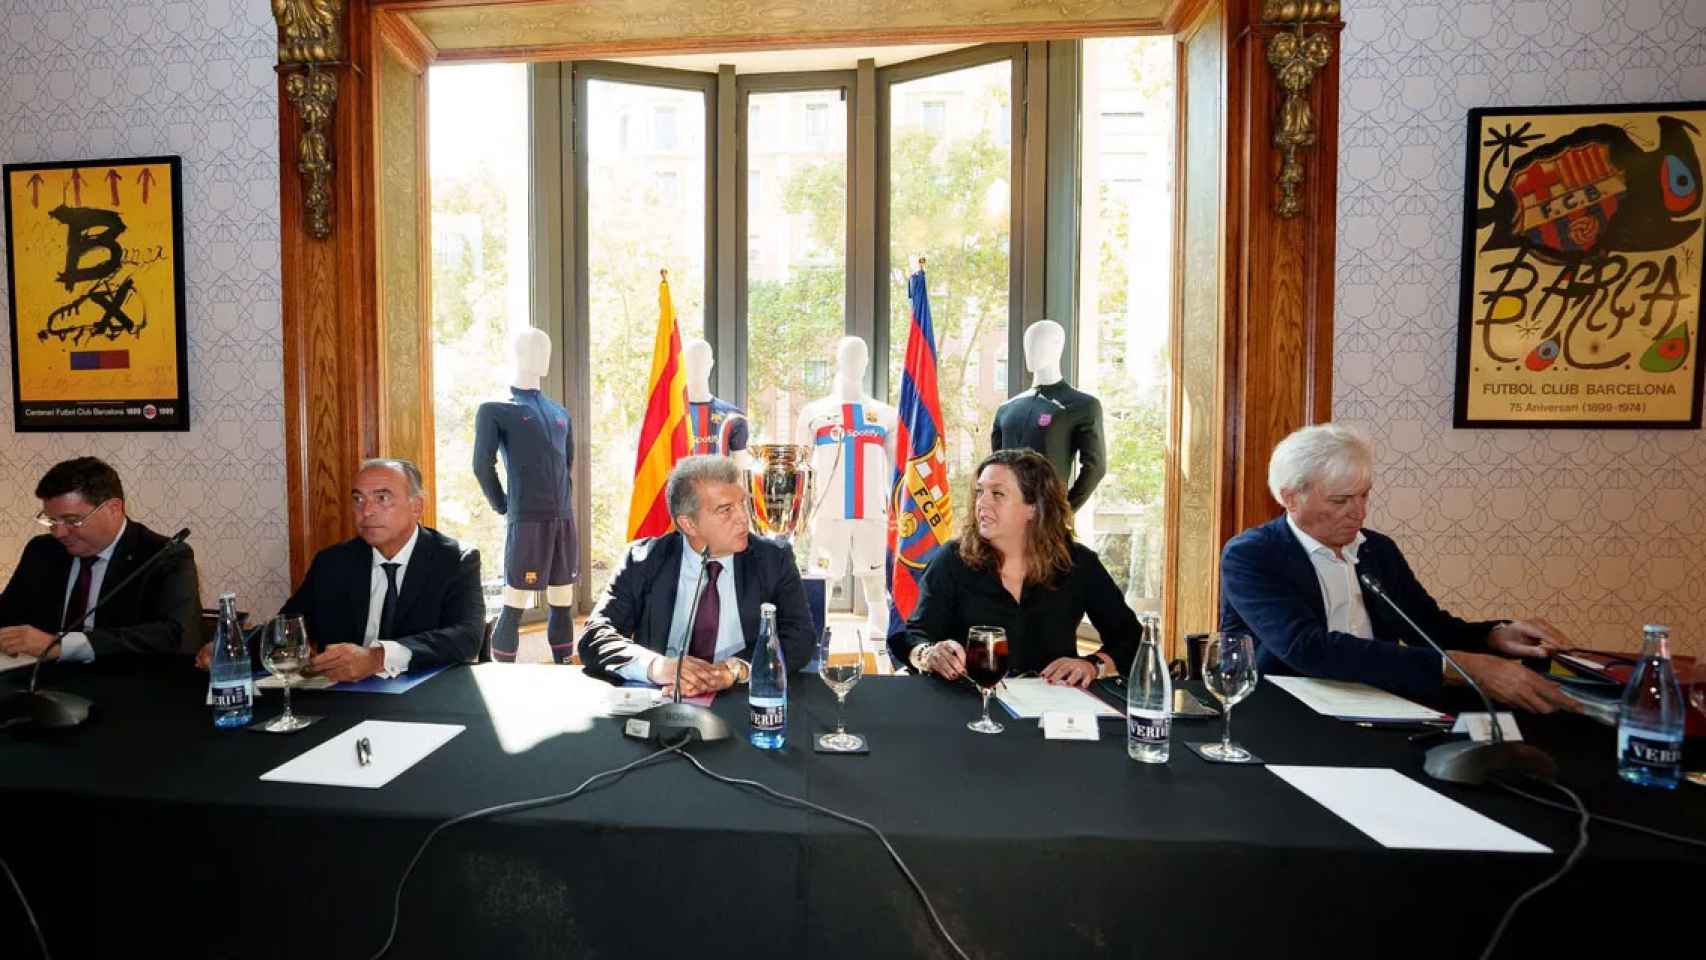 La junta directiva del Barça de Laporta reunida en reunión ordinaria / FCB